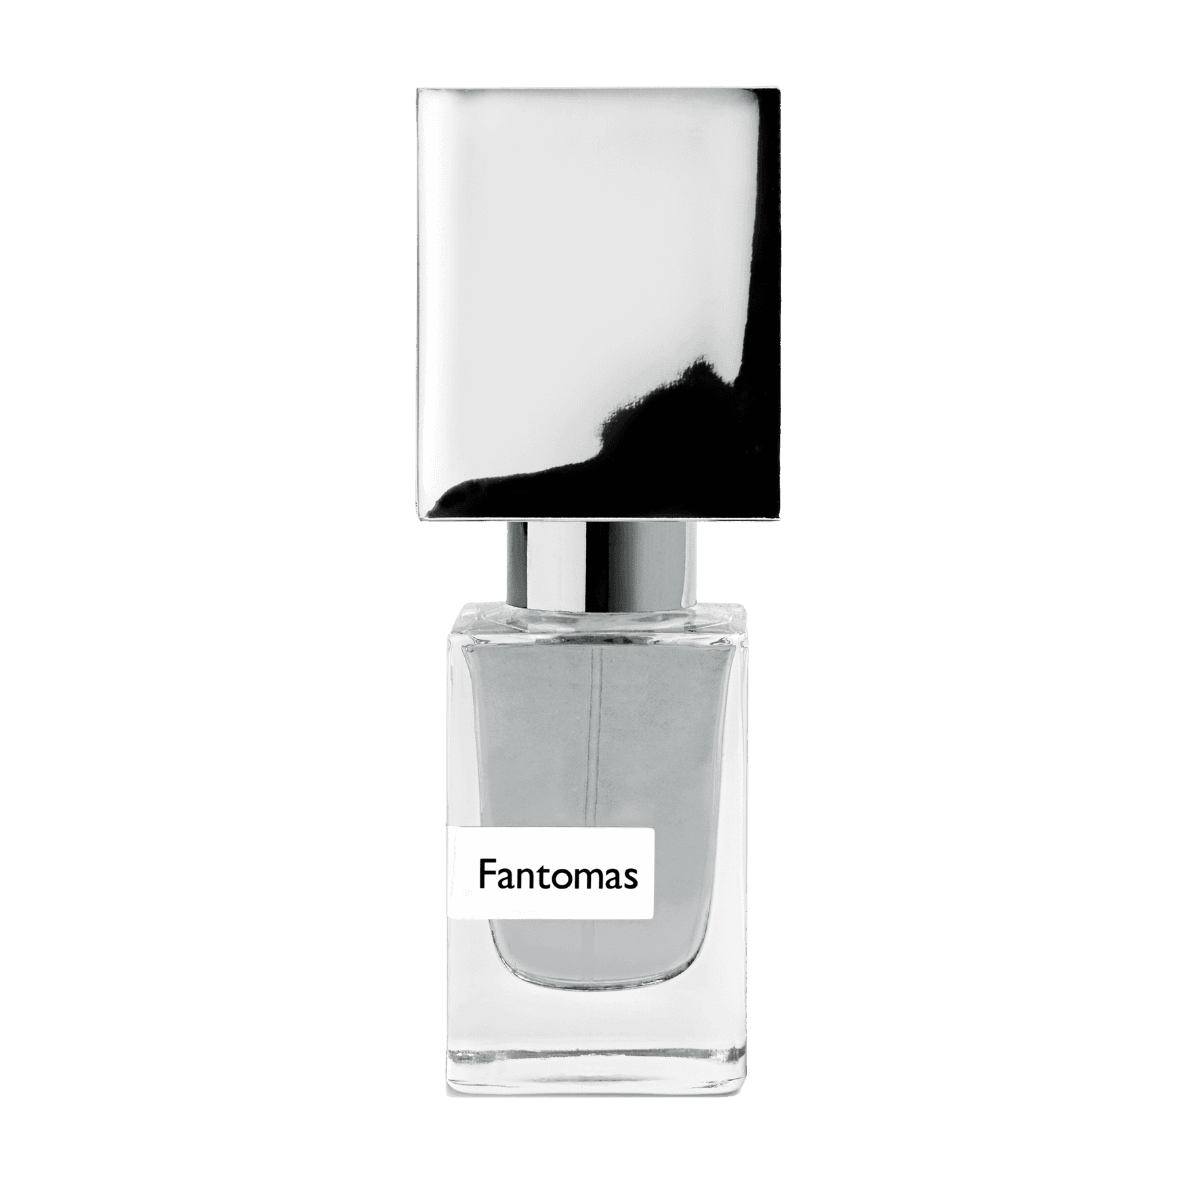 Image of Fantomas extrait de parfum 30 ml by the perfume brand Nasomatto